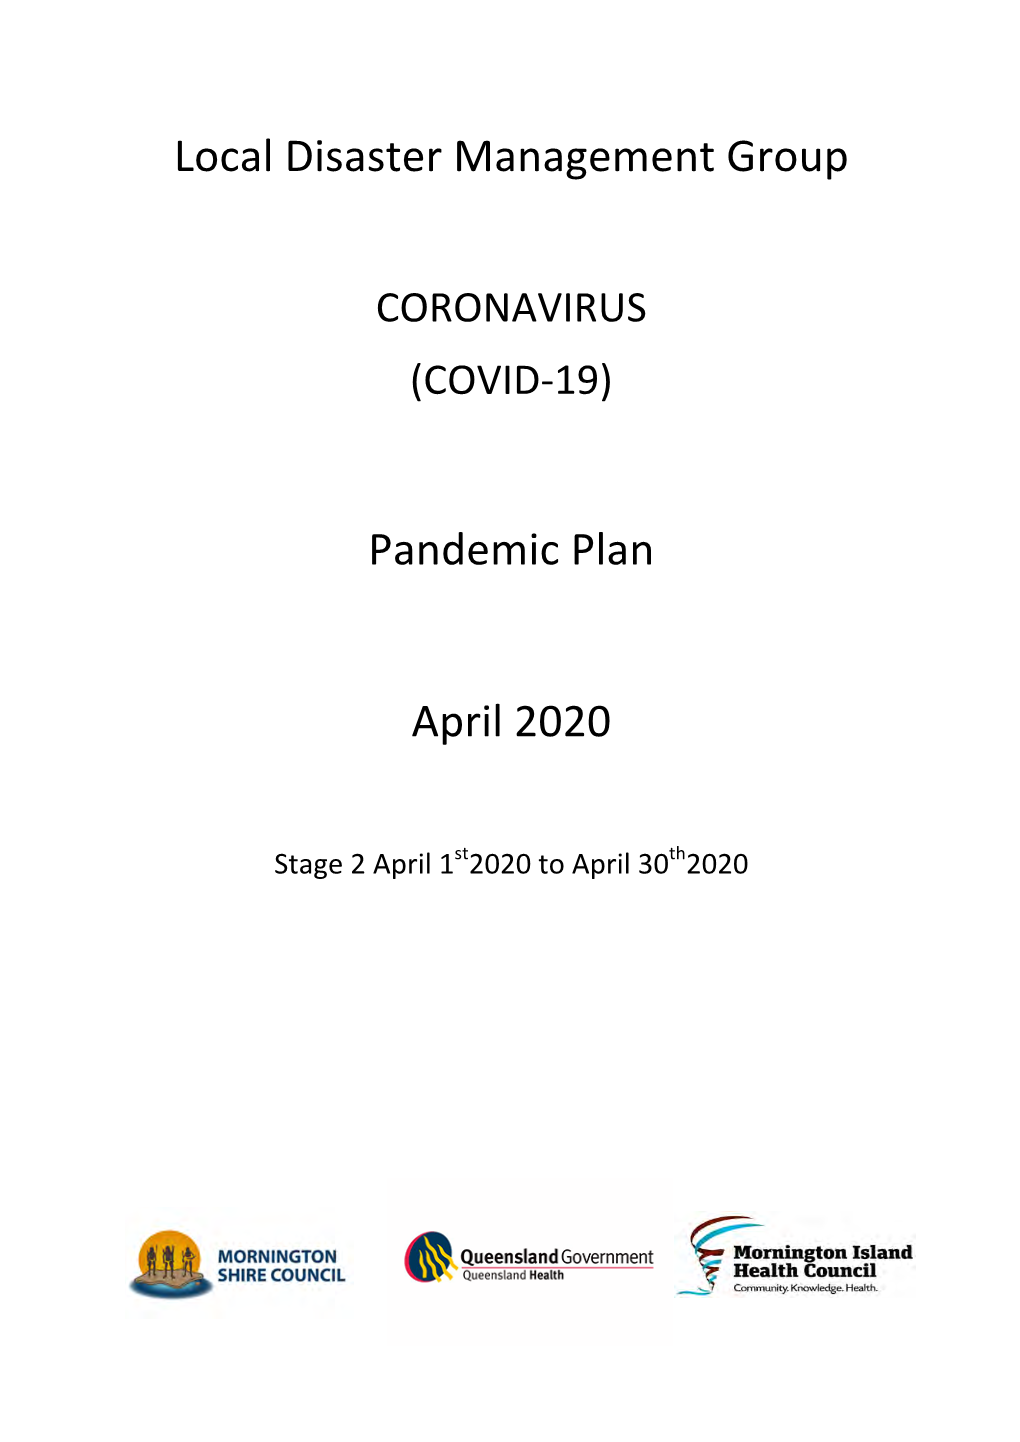 Local Disaster Management Group Pandemic Plan April 2020